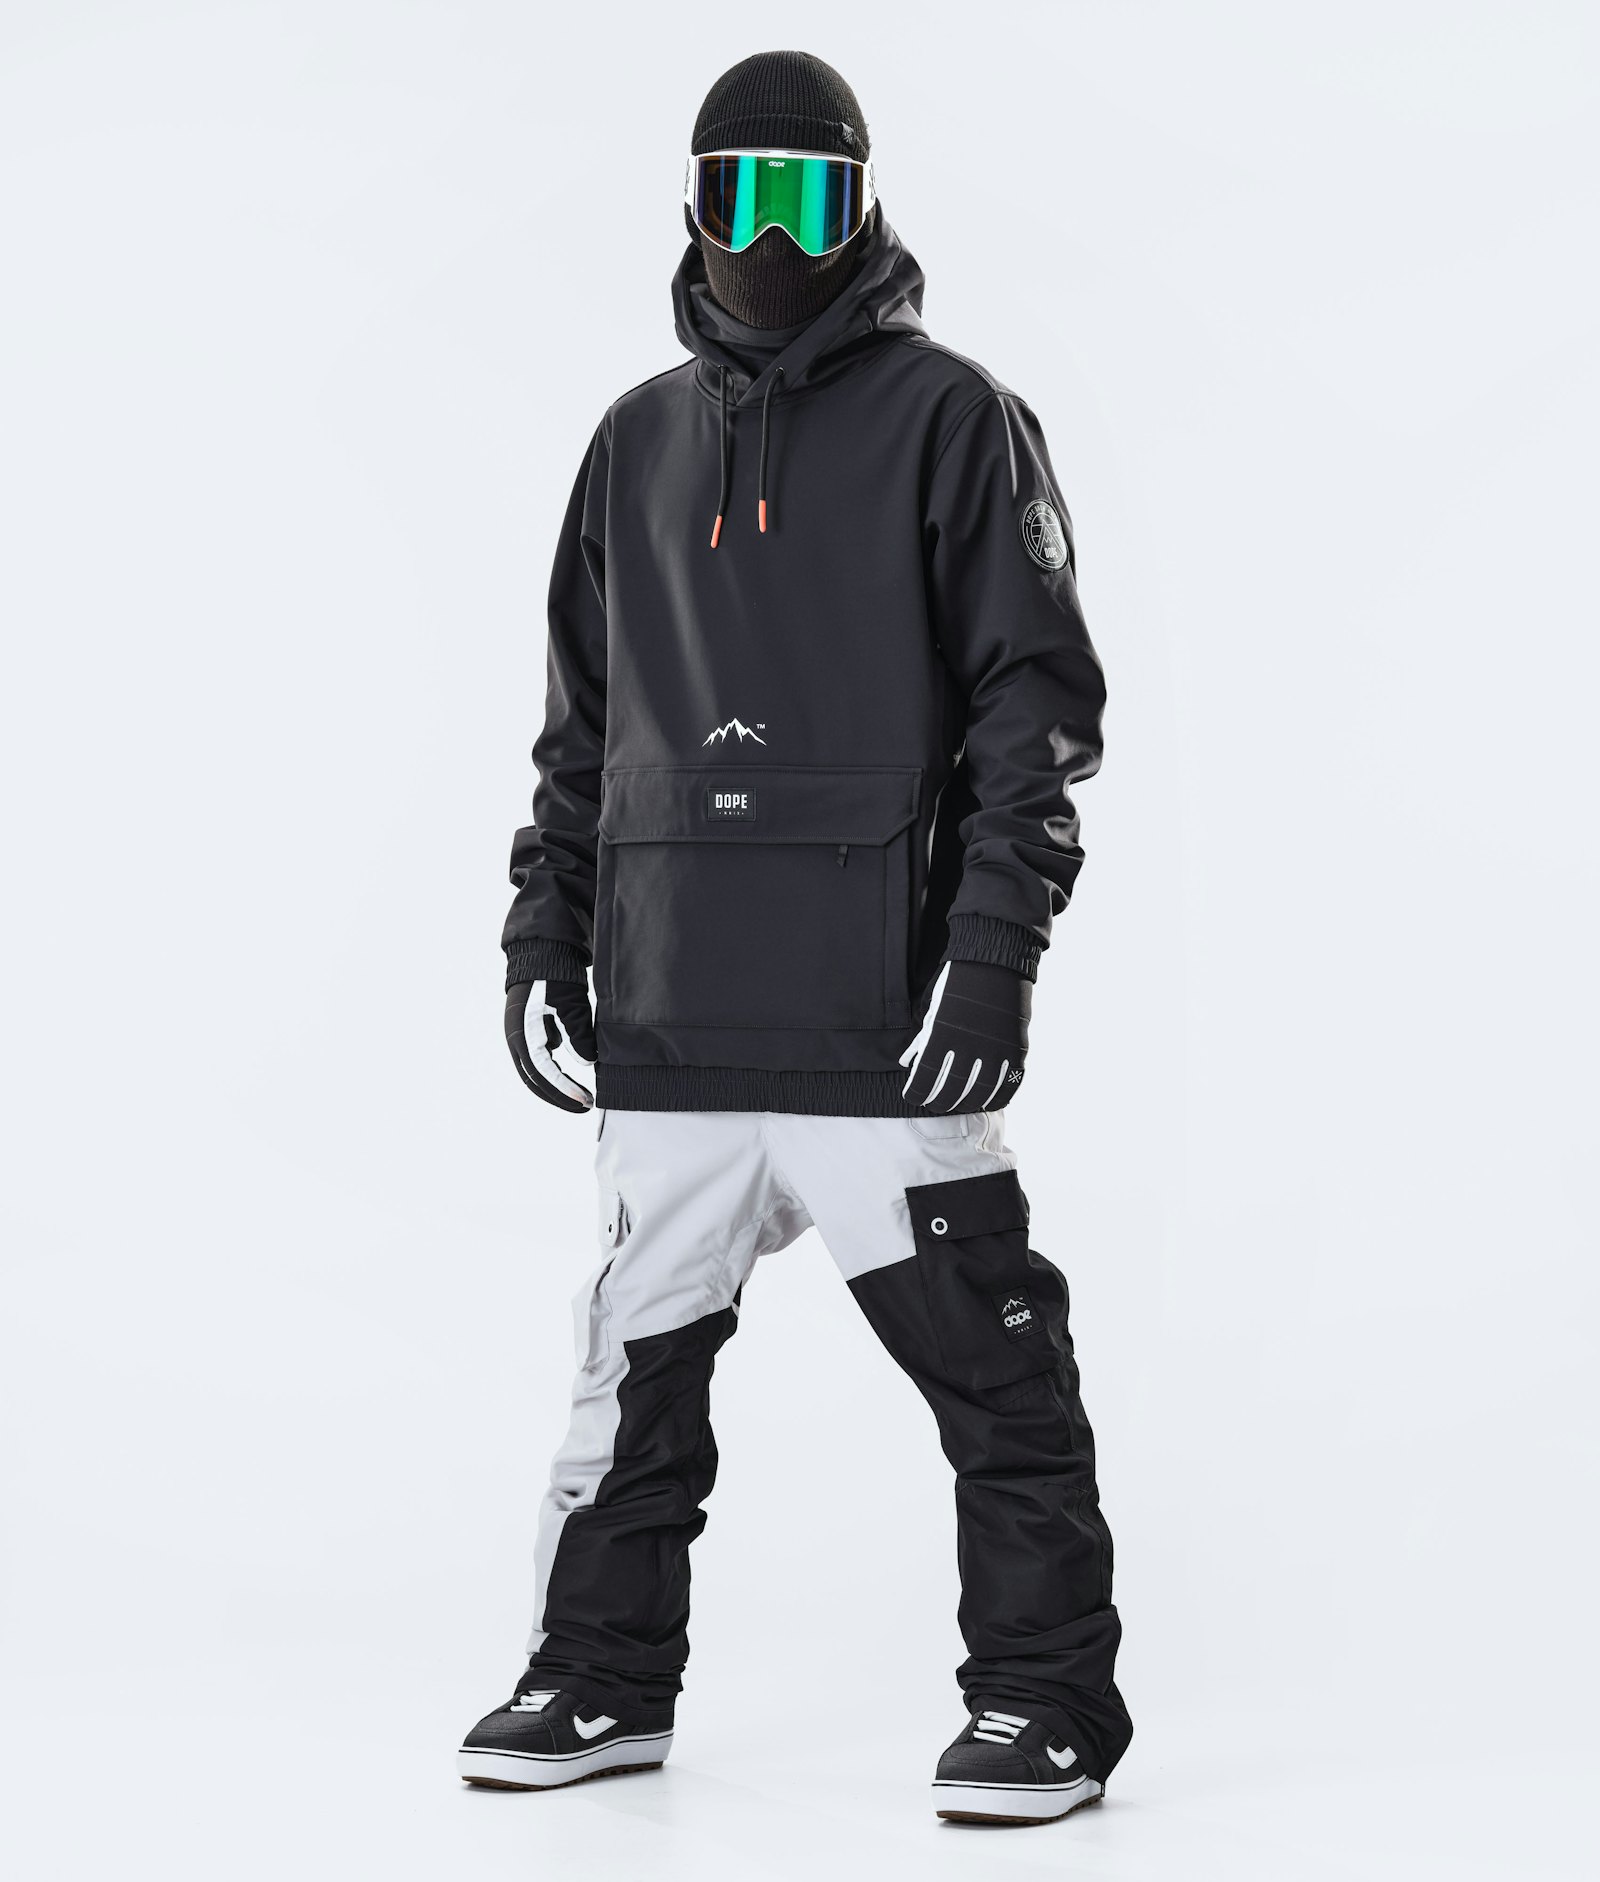 Dope Wylie 10k Snowboard Jacket Men Patch Black